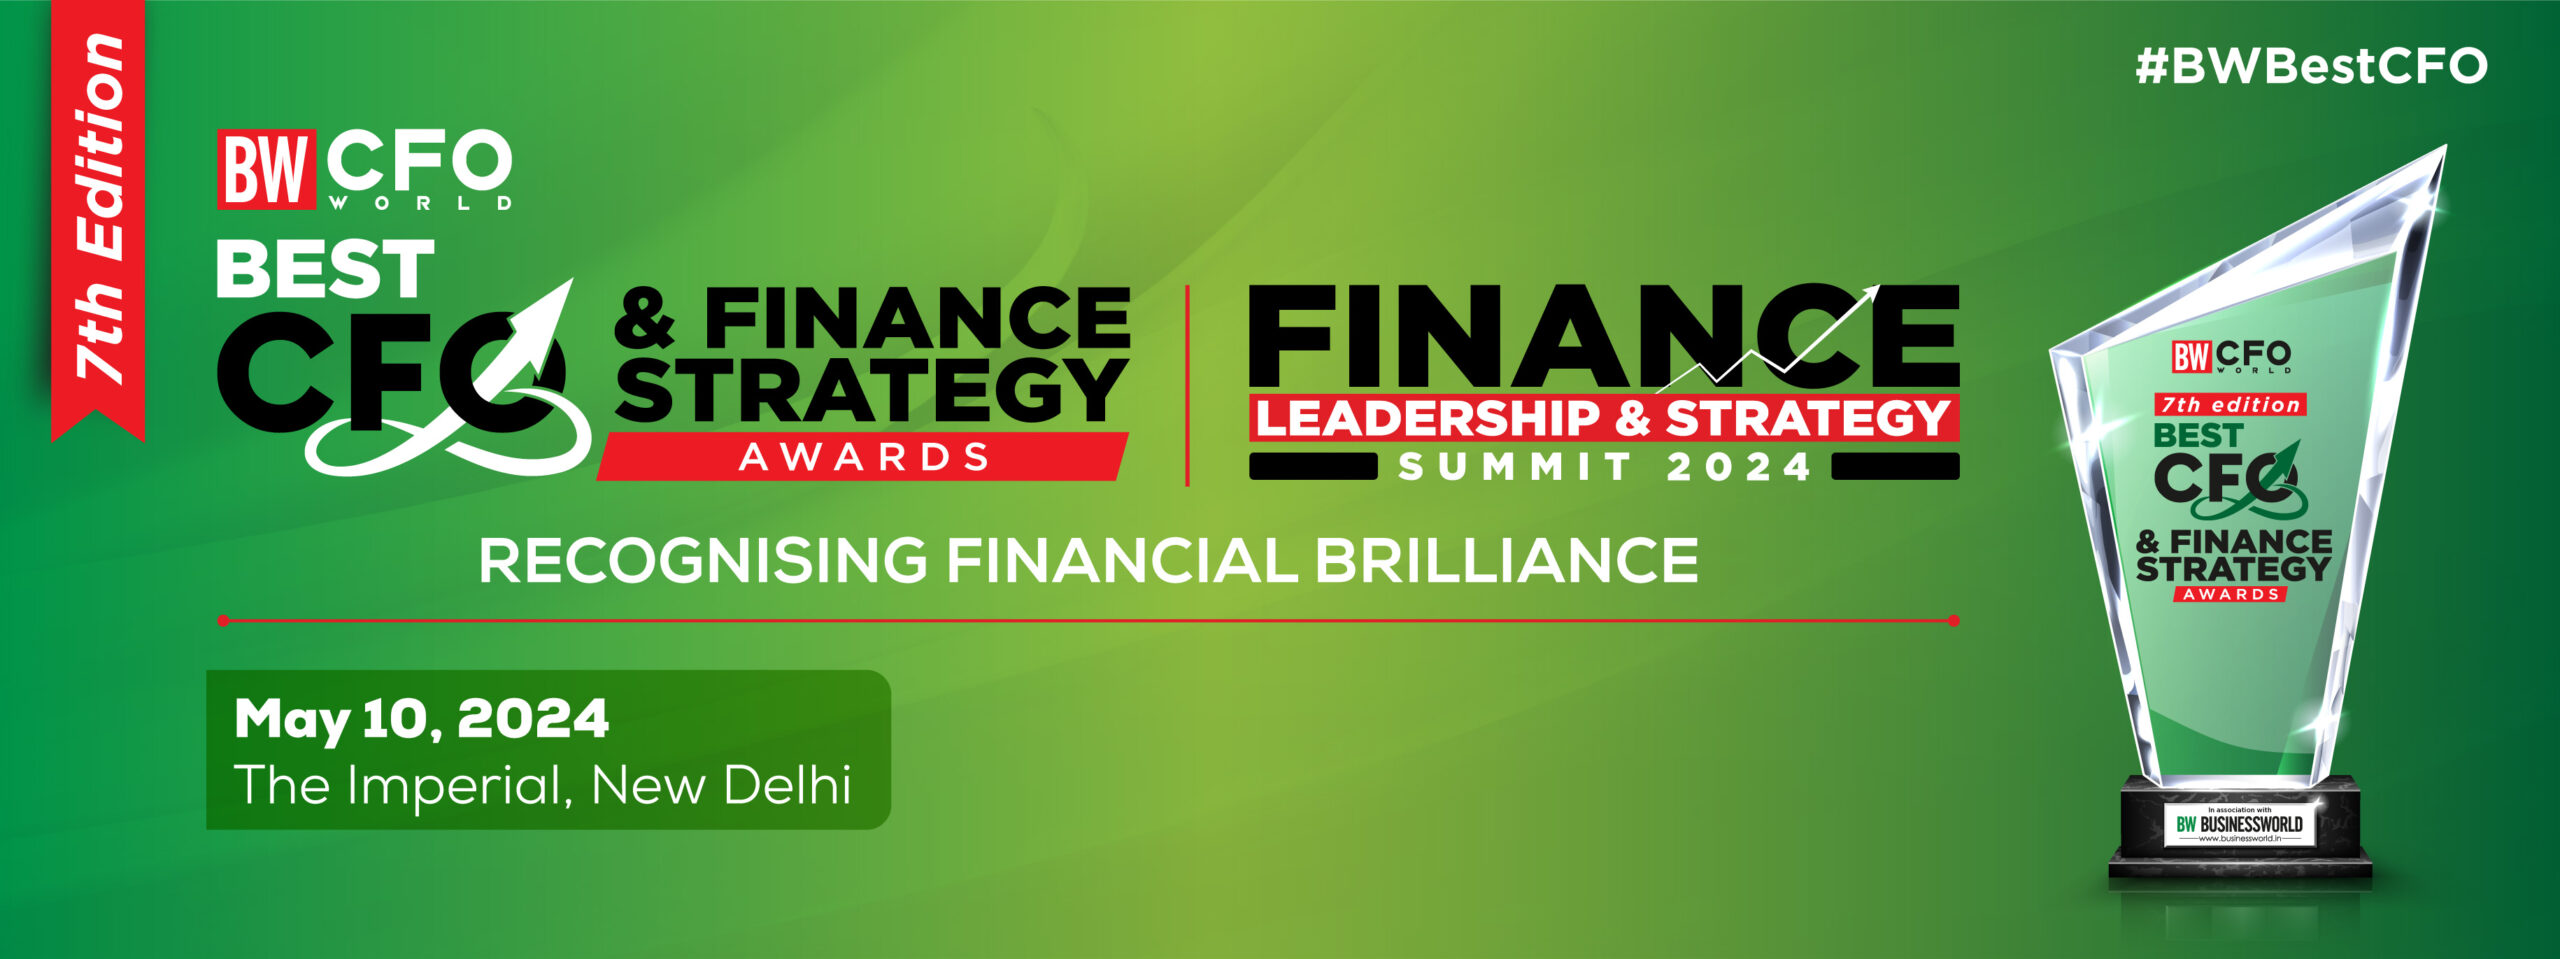 Best CFO & Finance Strategy Awards 2023-24.